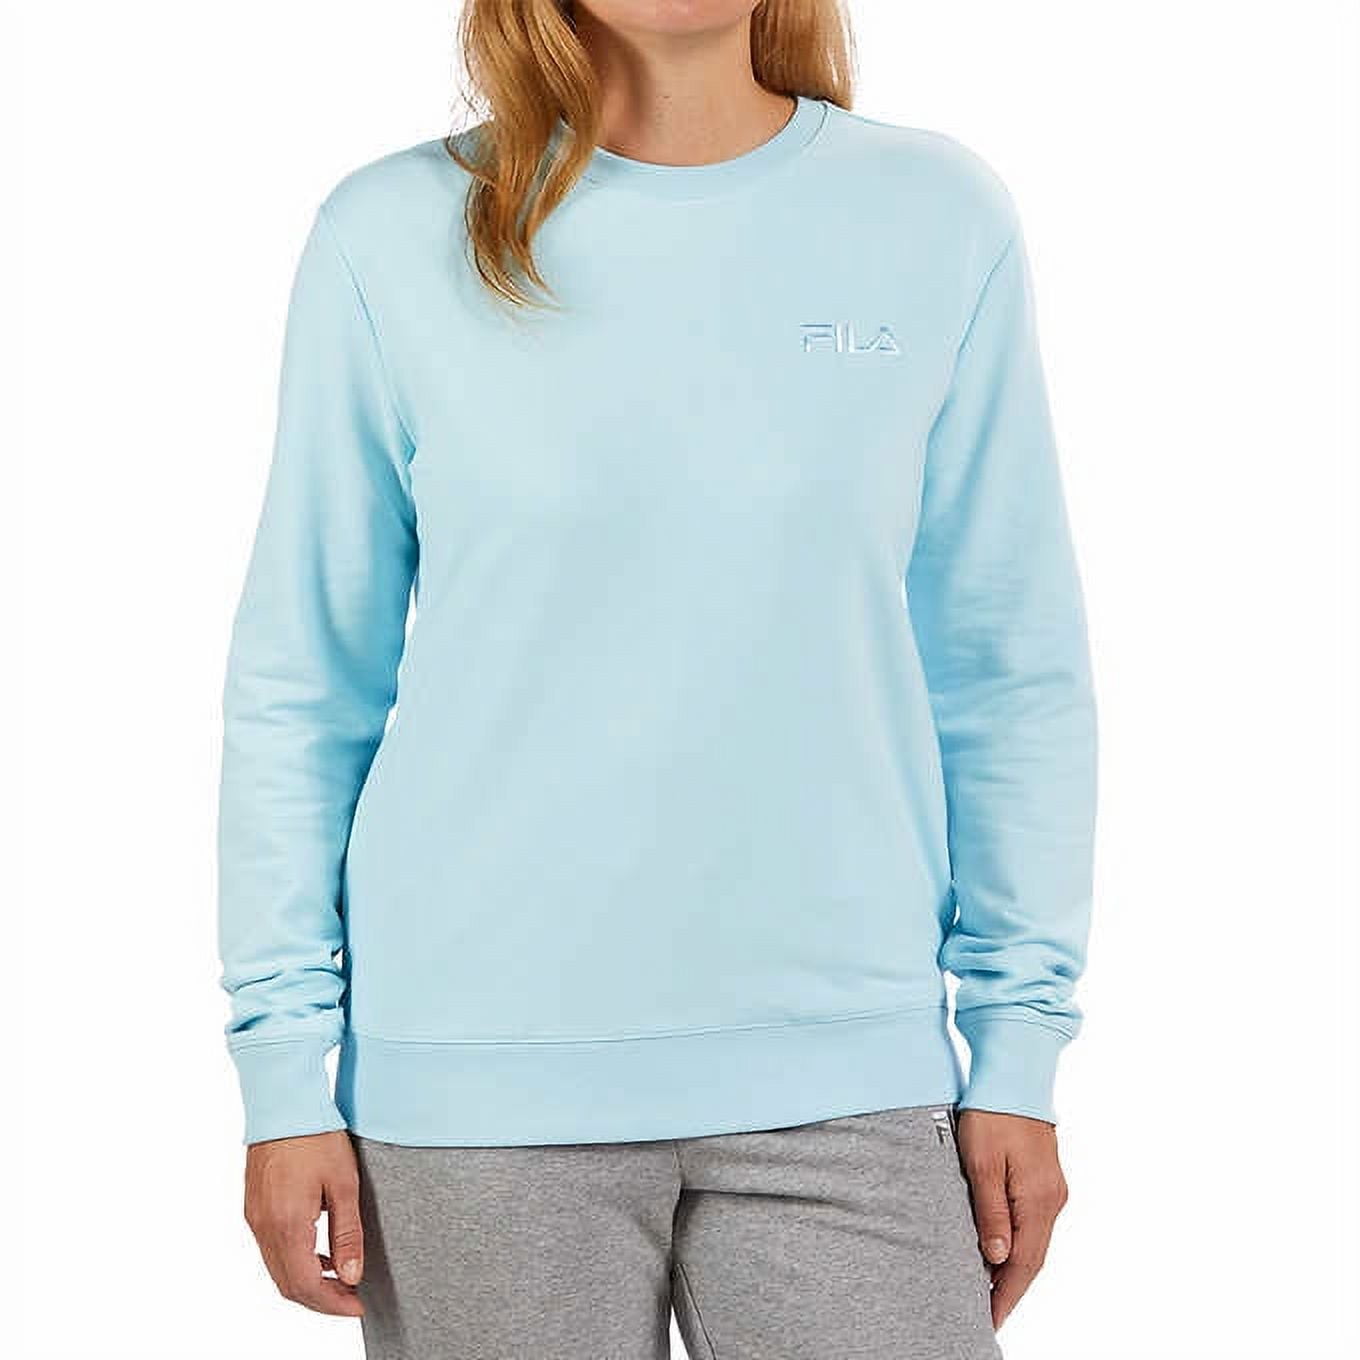 Fila Womens French Terry Crewneck Sweatshirt,Crystal Blue,X-Large